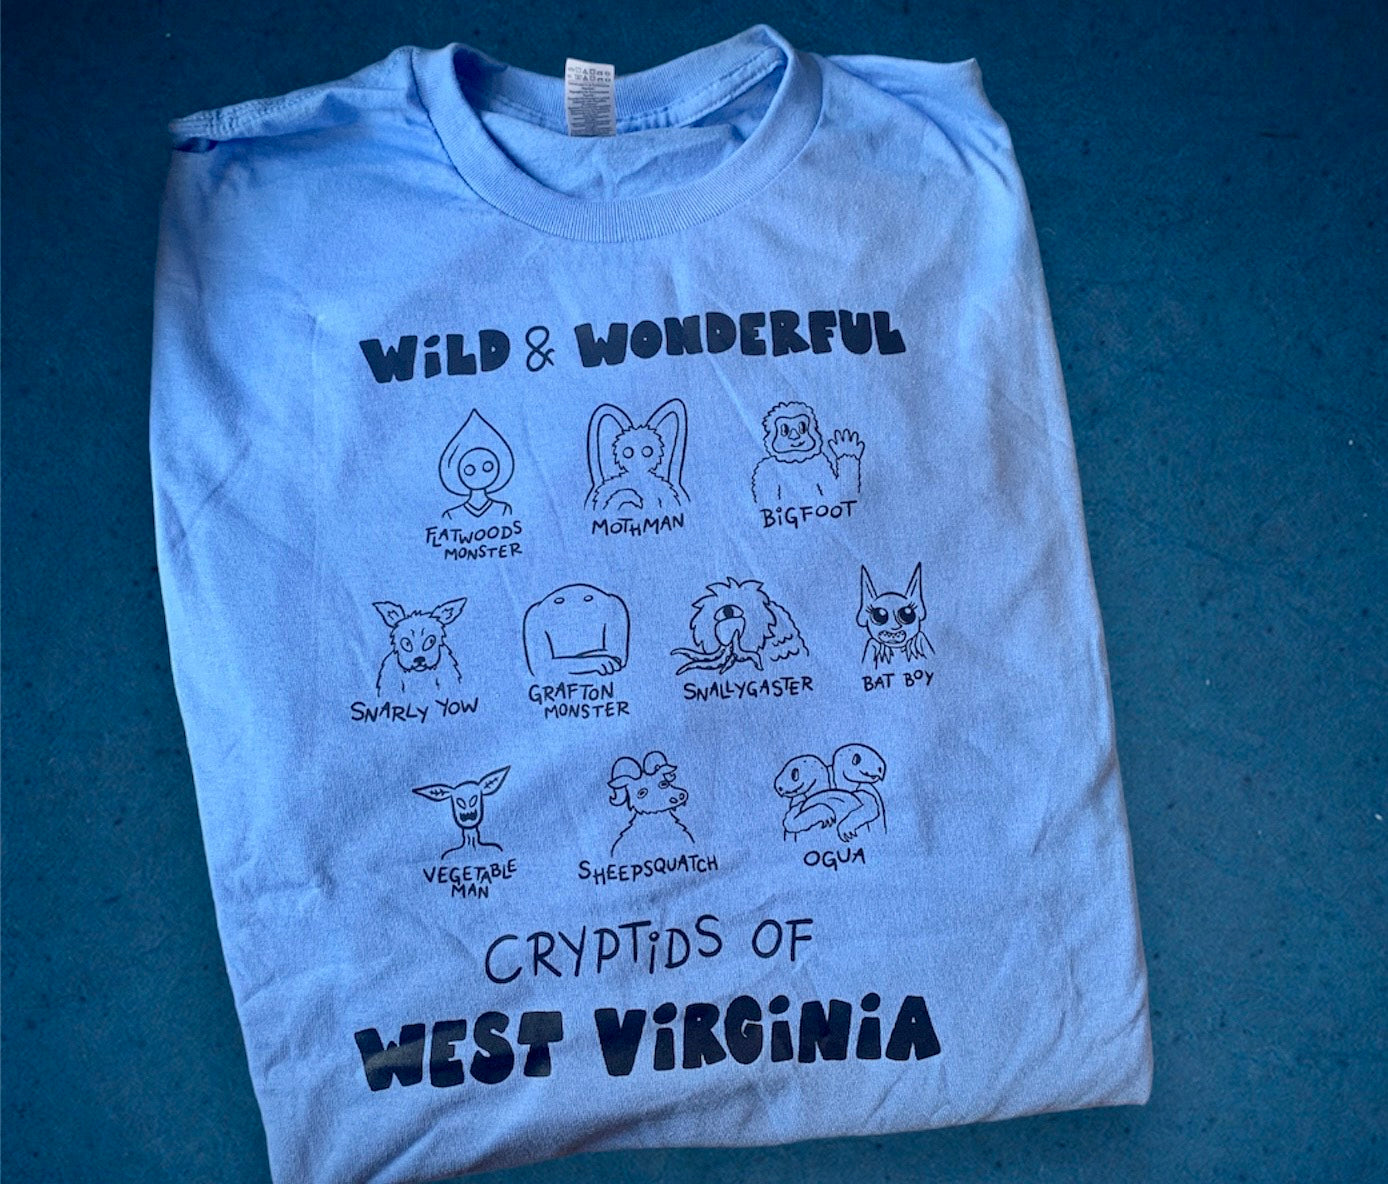 West Virginia Cryptids Shirt